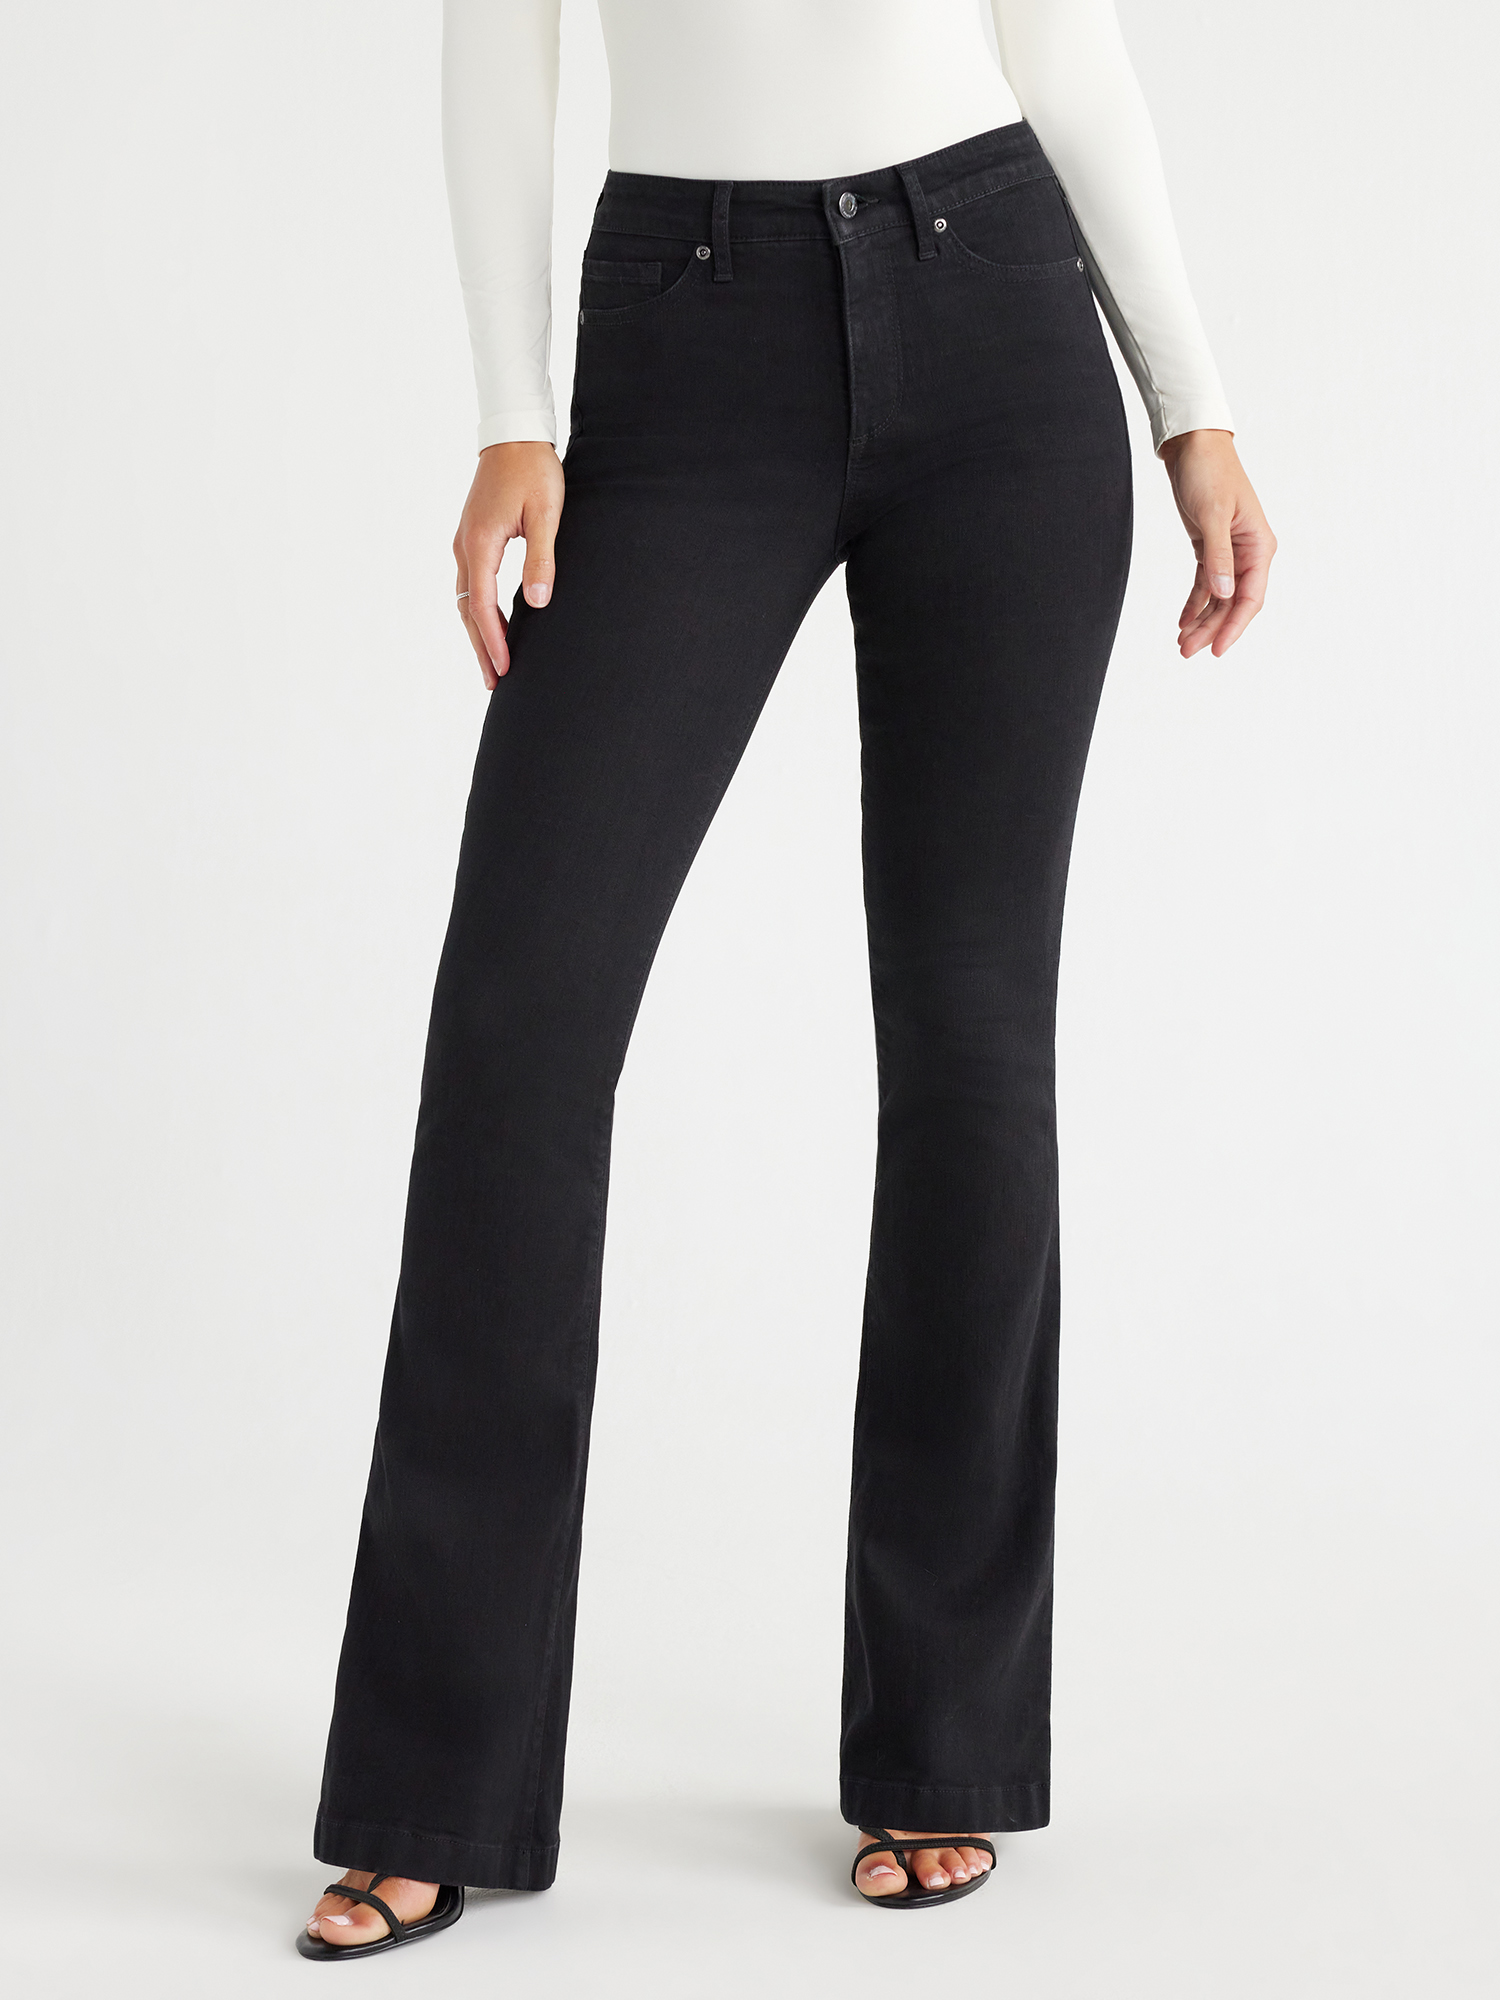 Sofia Jeans Women's Melissa Flare High Rise Black Jeans, 33" Inseam, Sizes 2-20